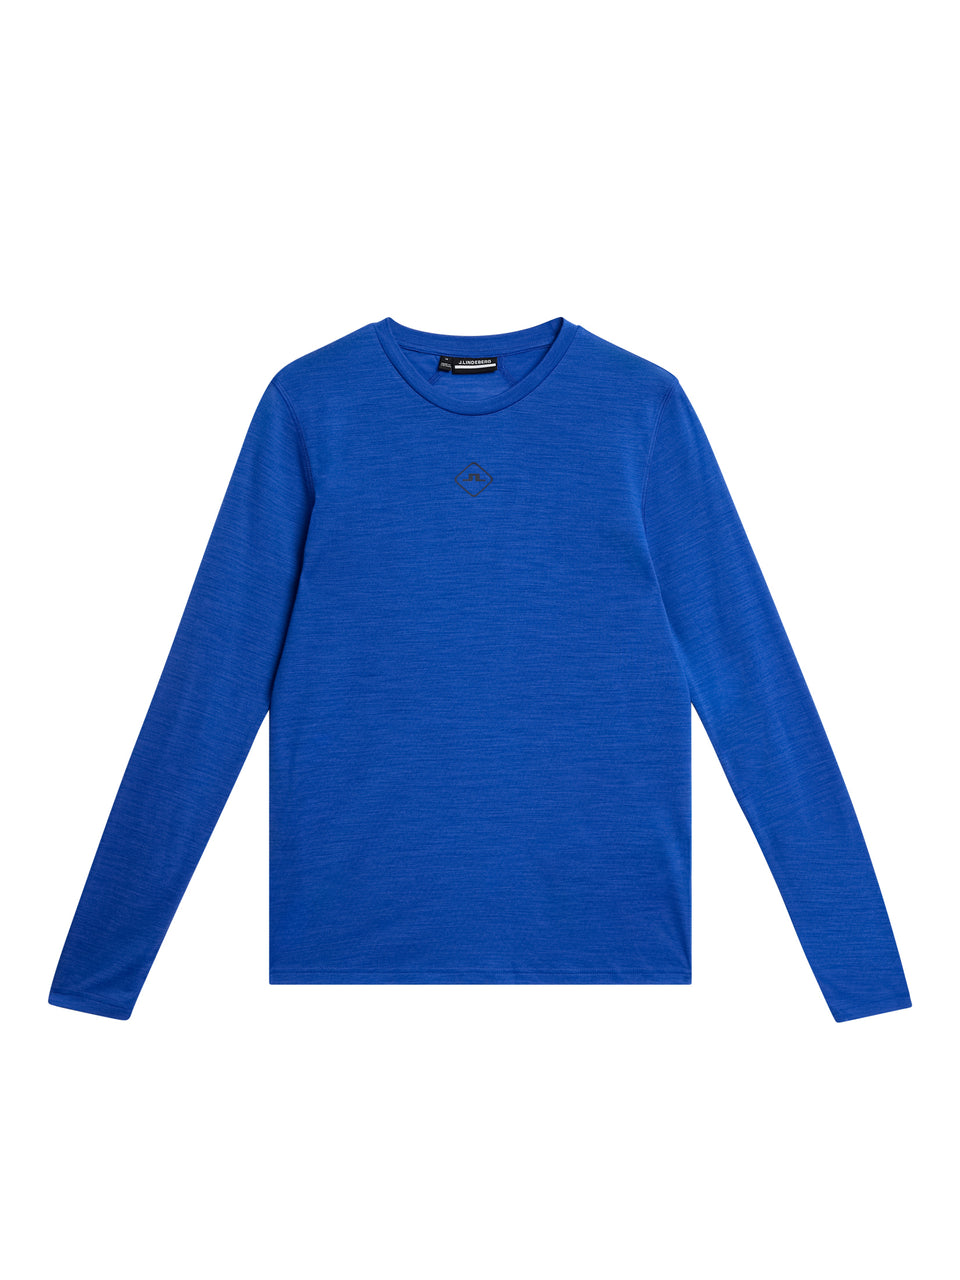 Shauna Wool LS T-shirt / Dazzling Blue